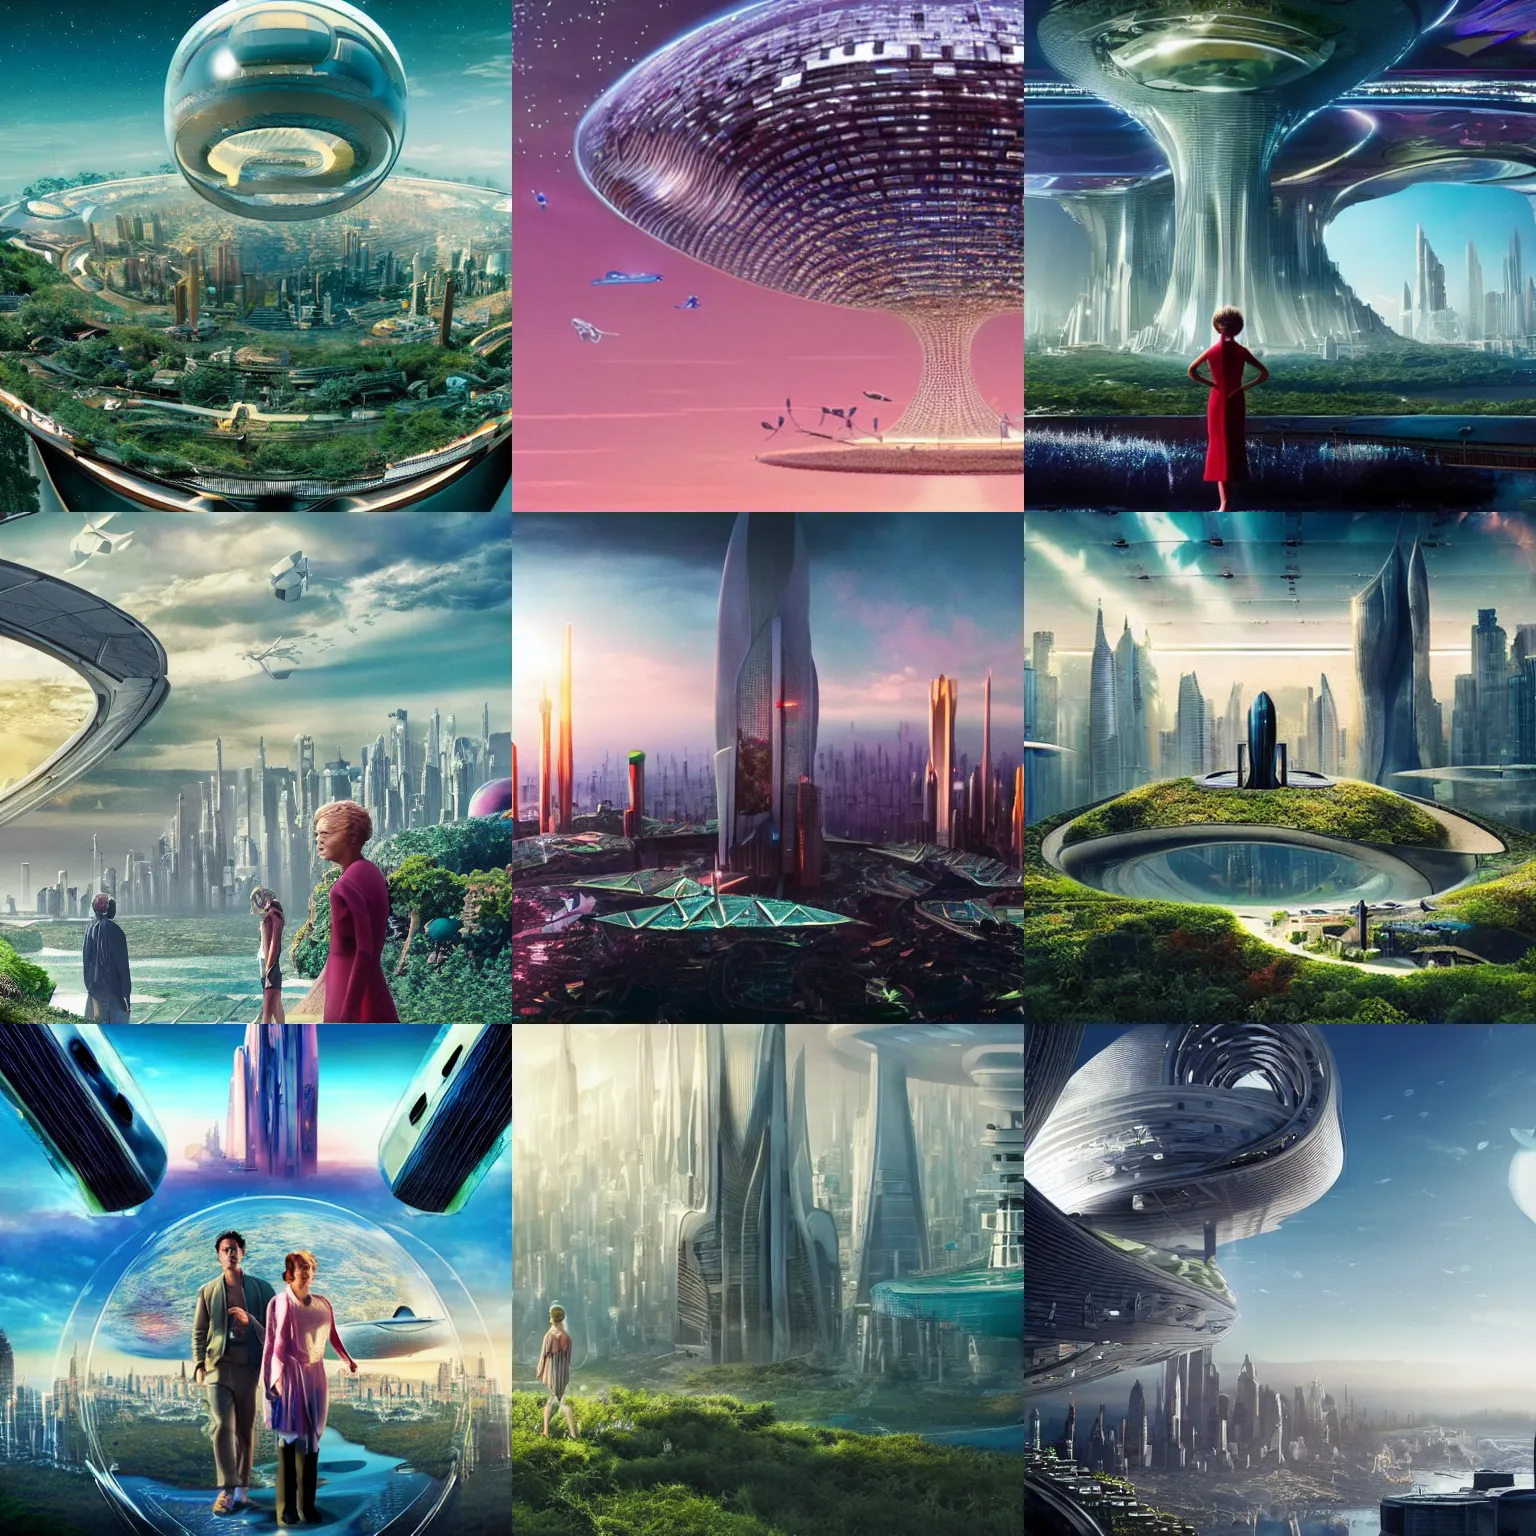 Prompt: a futuristic environmentally friendly utopian city, abundance, life, beauty, movie still